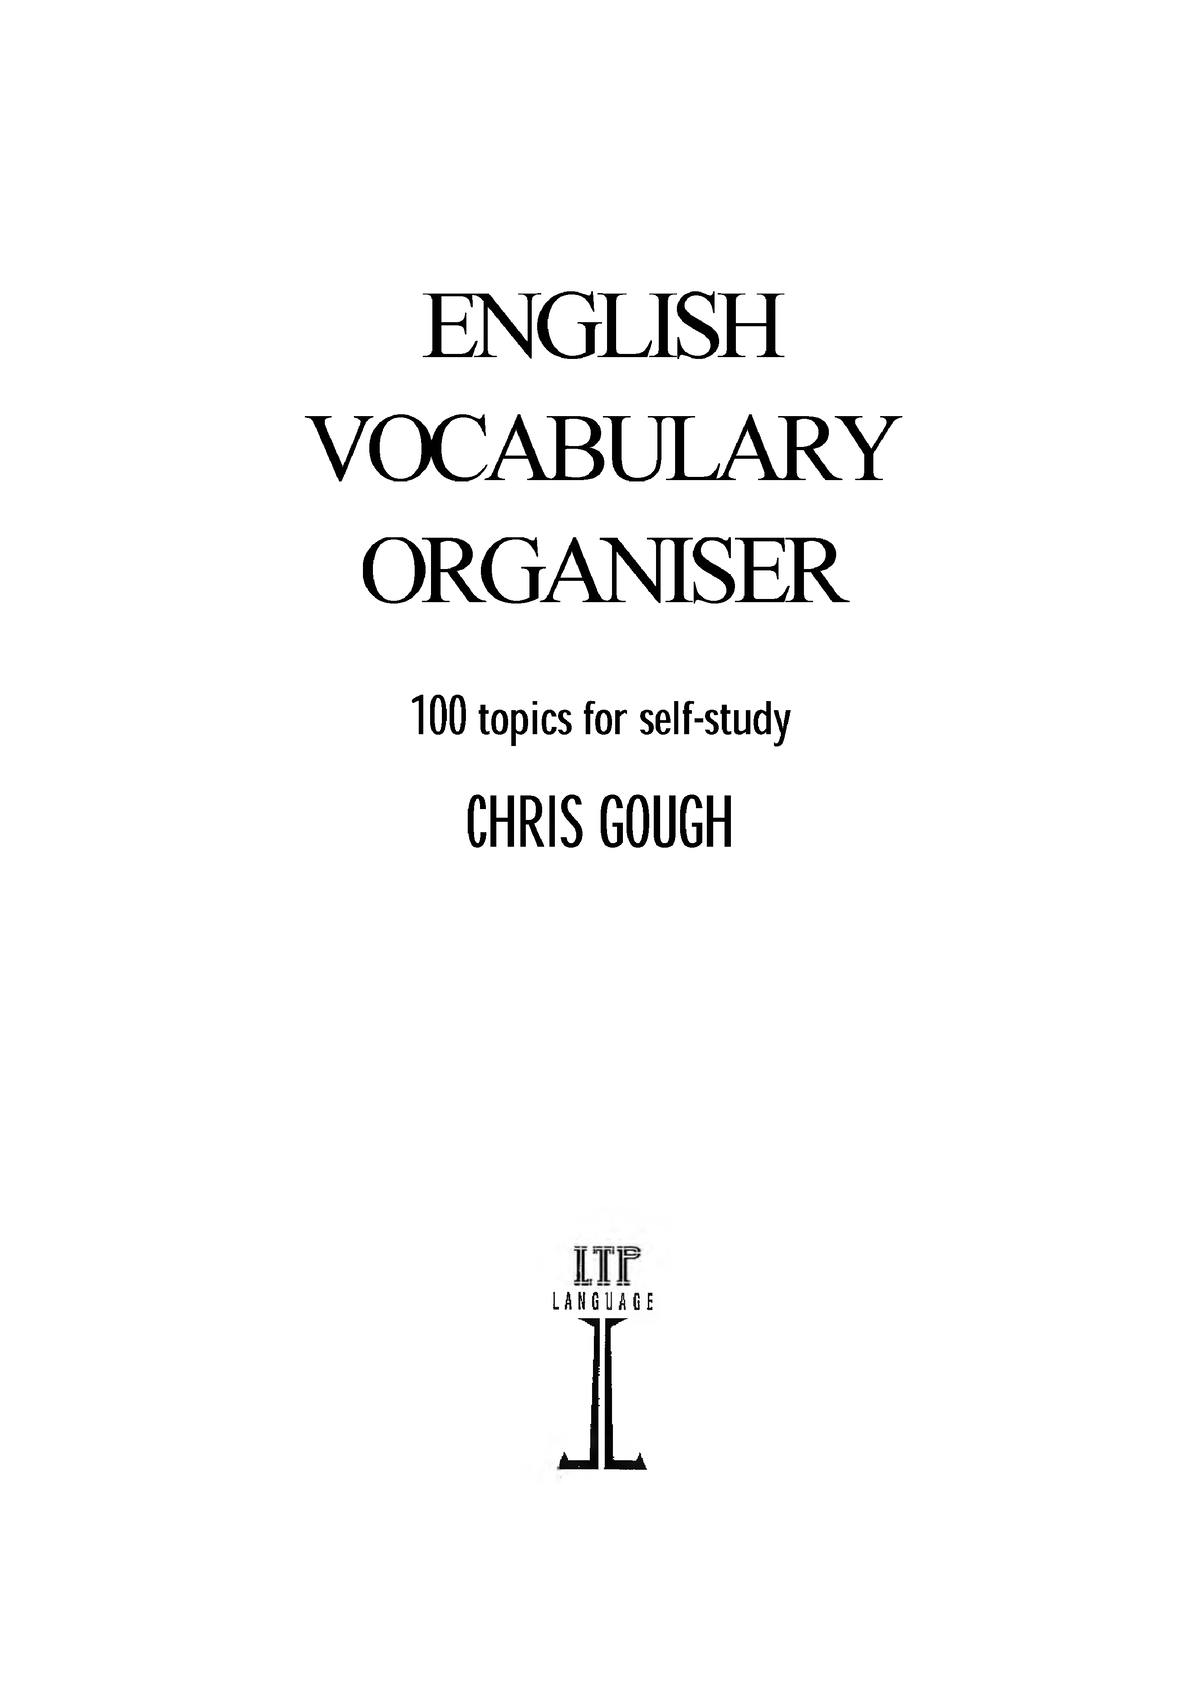 Topic 100. English Vocabulary Organiser. Хитрова Vocabulary Organiser. English Vocabulary Organiser pdf. 100 Topics for self-study Chris Gough.